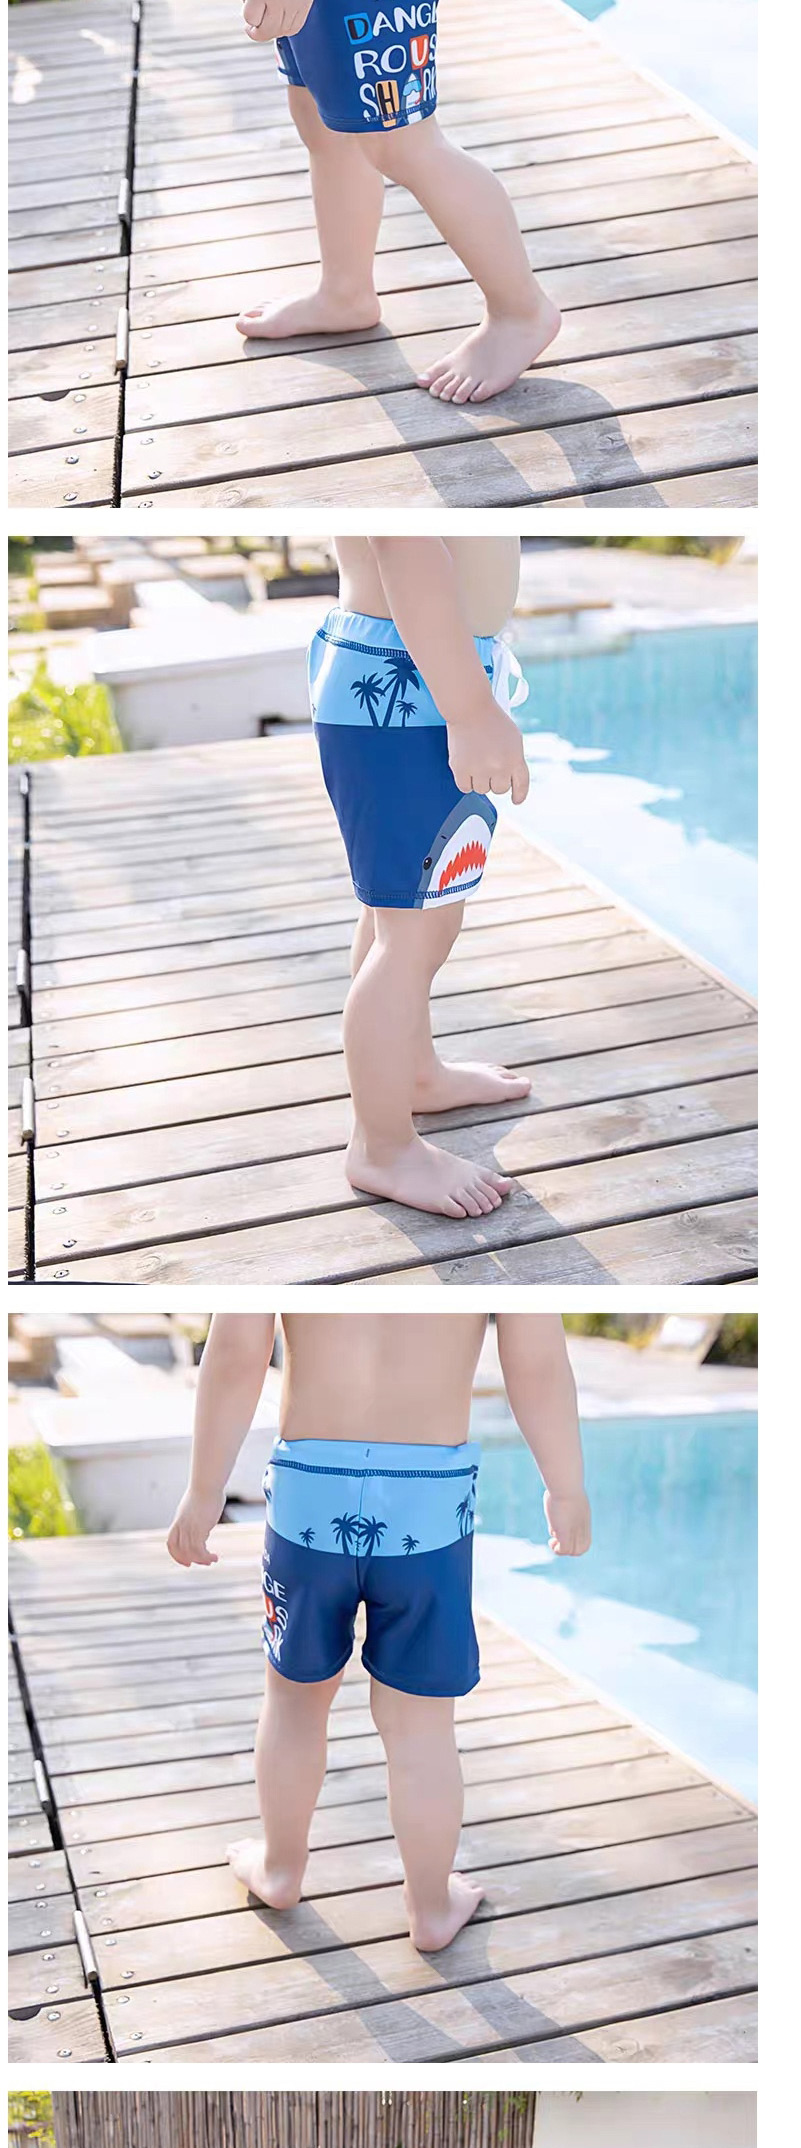 Fashion Digostar New Tiger + Hat Childrens Cartoon Pattern Swimming Trunks Boxer Swimming Trunks + Swimming Cap Swimming Suit,Kids Swimwear